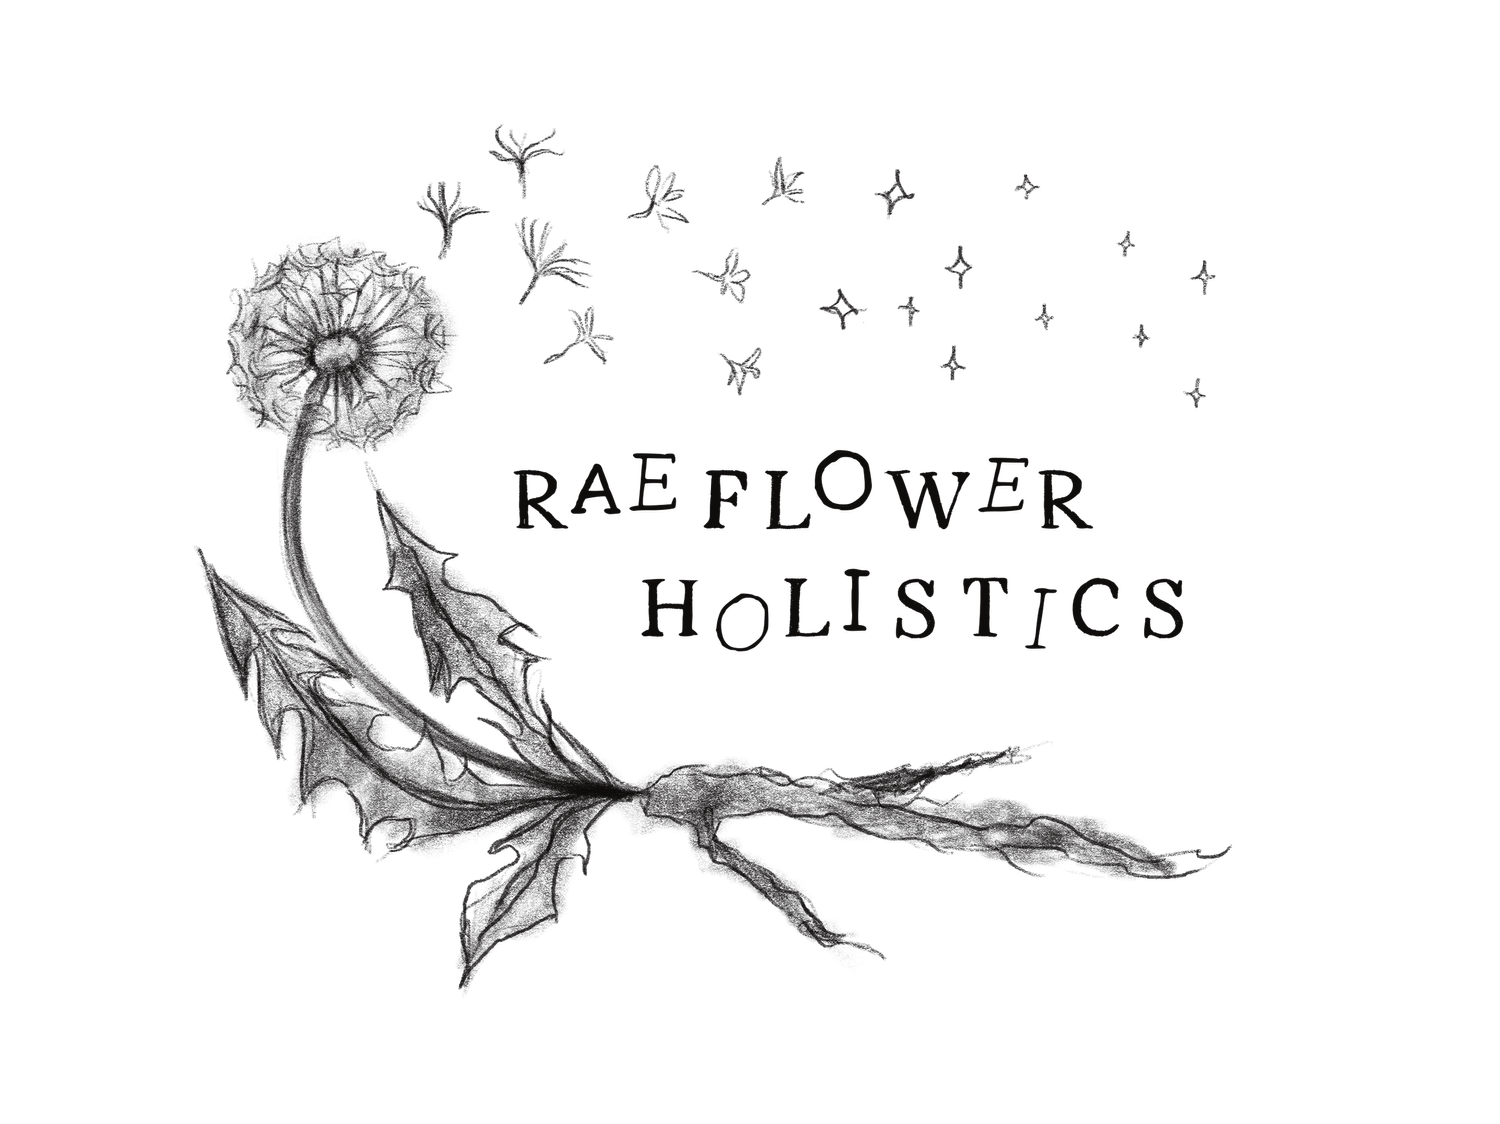 Raeflower Holistics